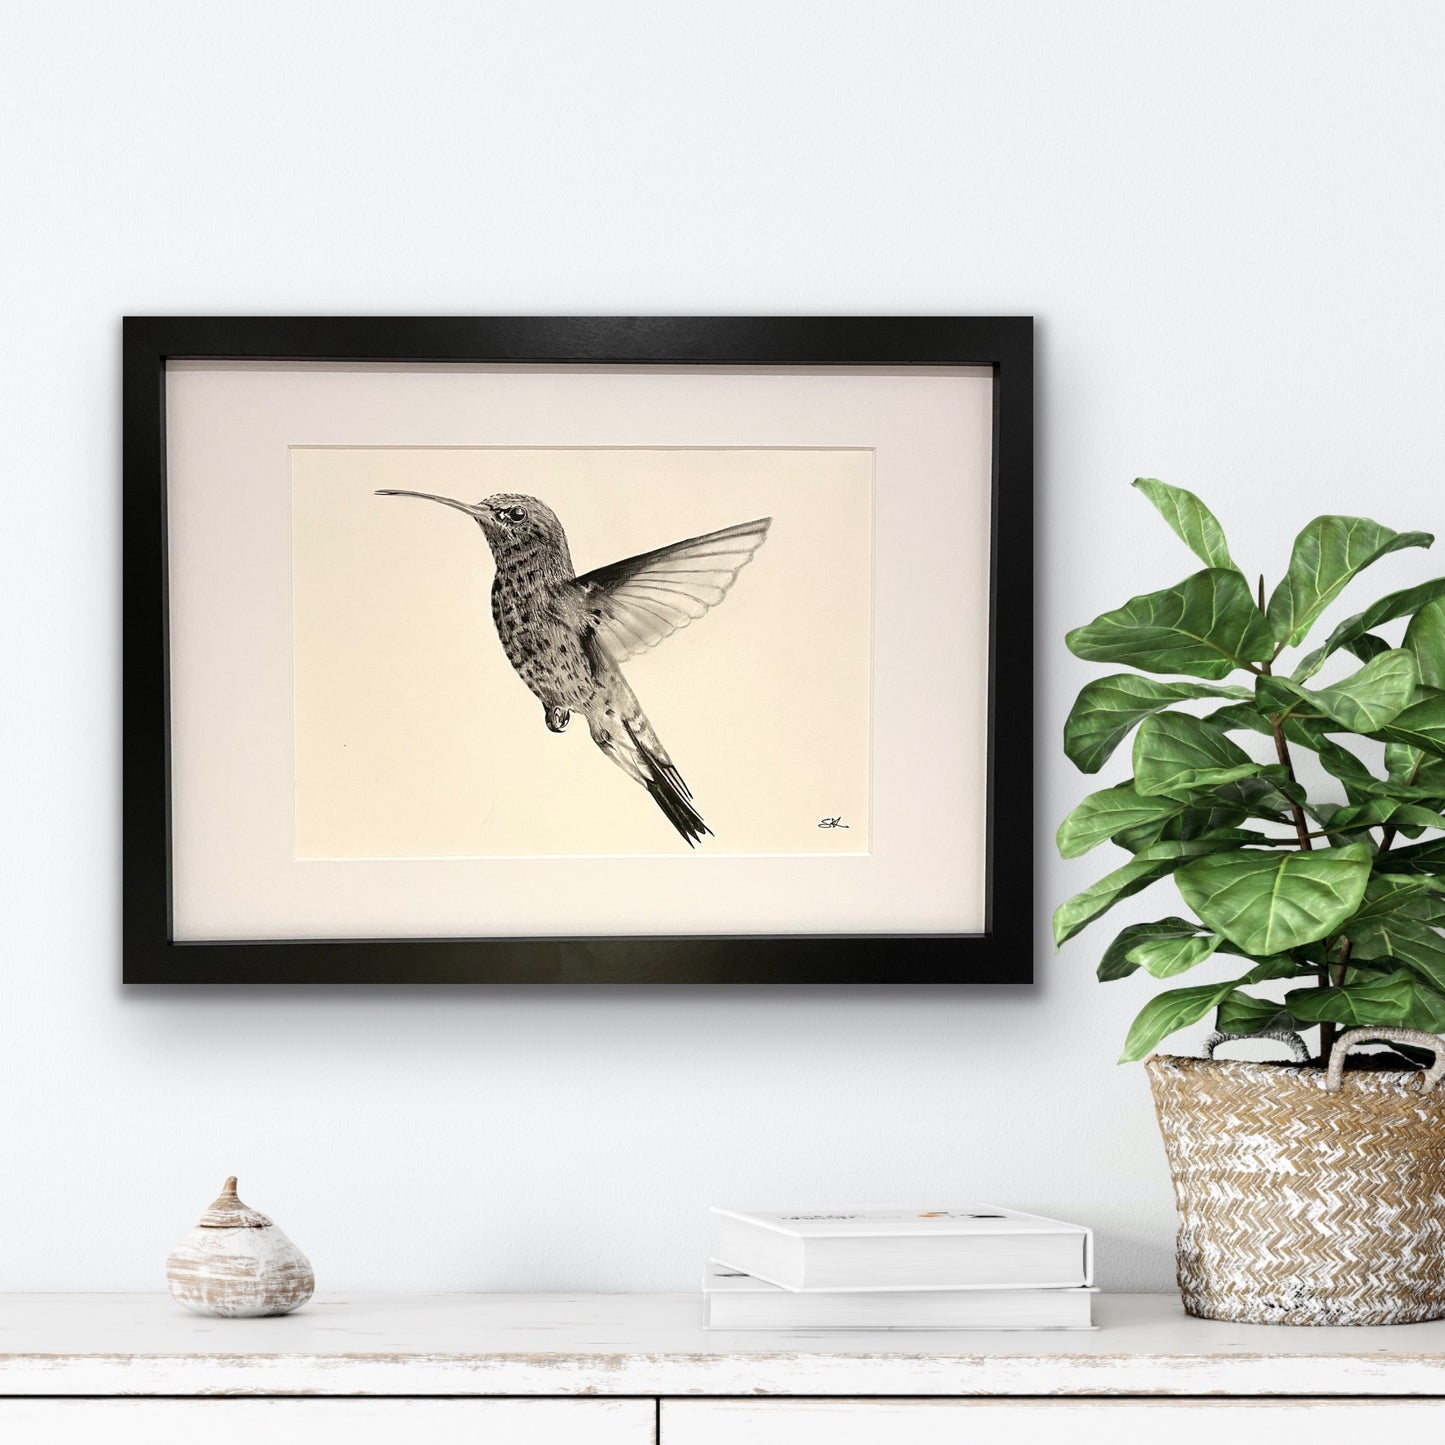 Adhara the Hummingbird Hand Drawn Print